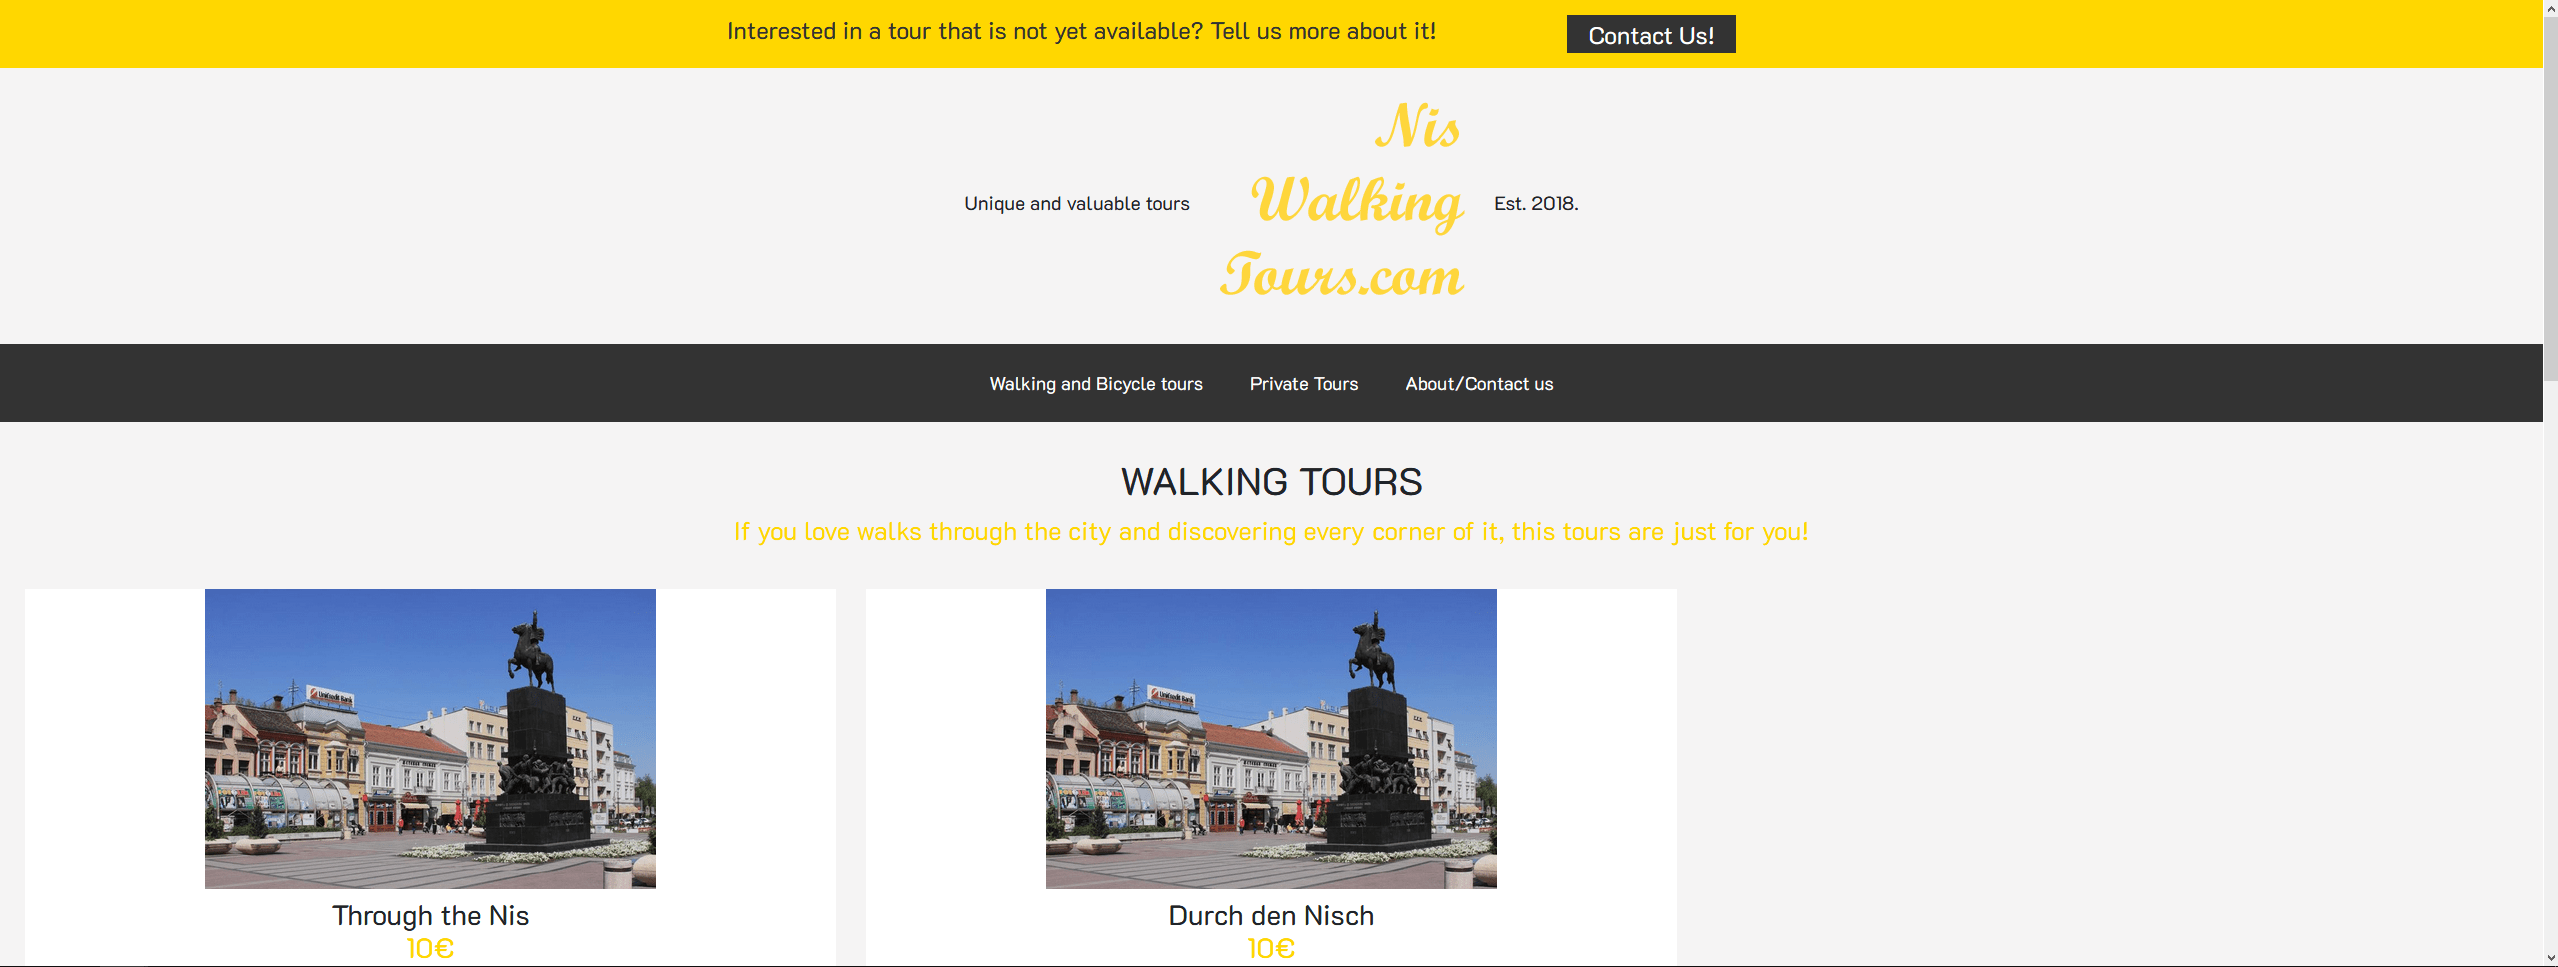 Tour booking website